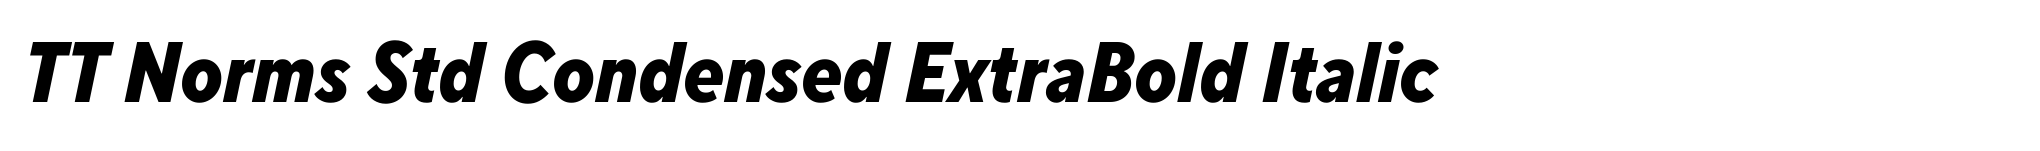 TT Norms Std Condensed ExtraBold Italic image